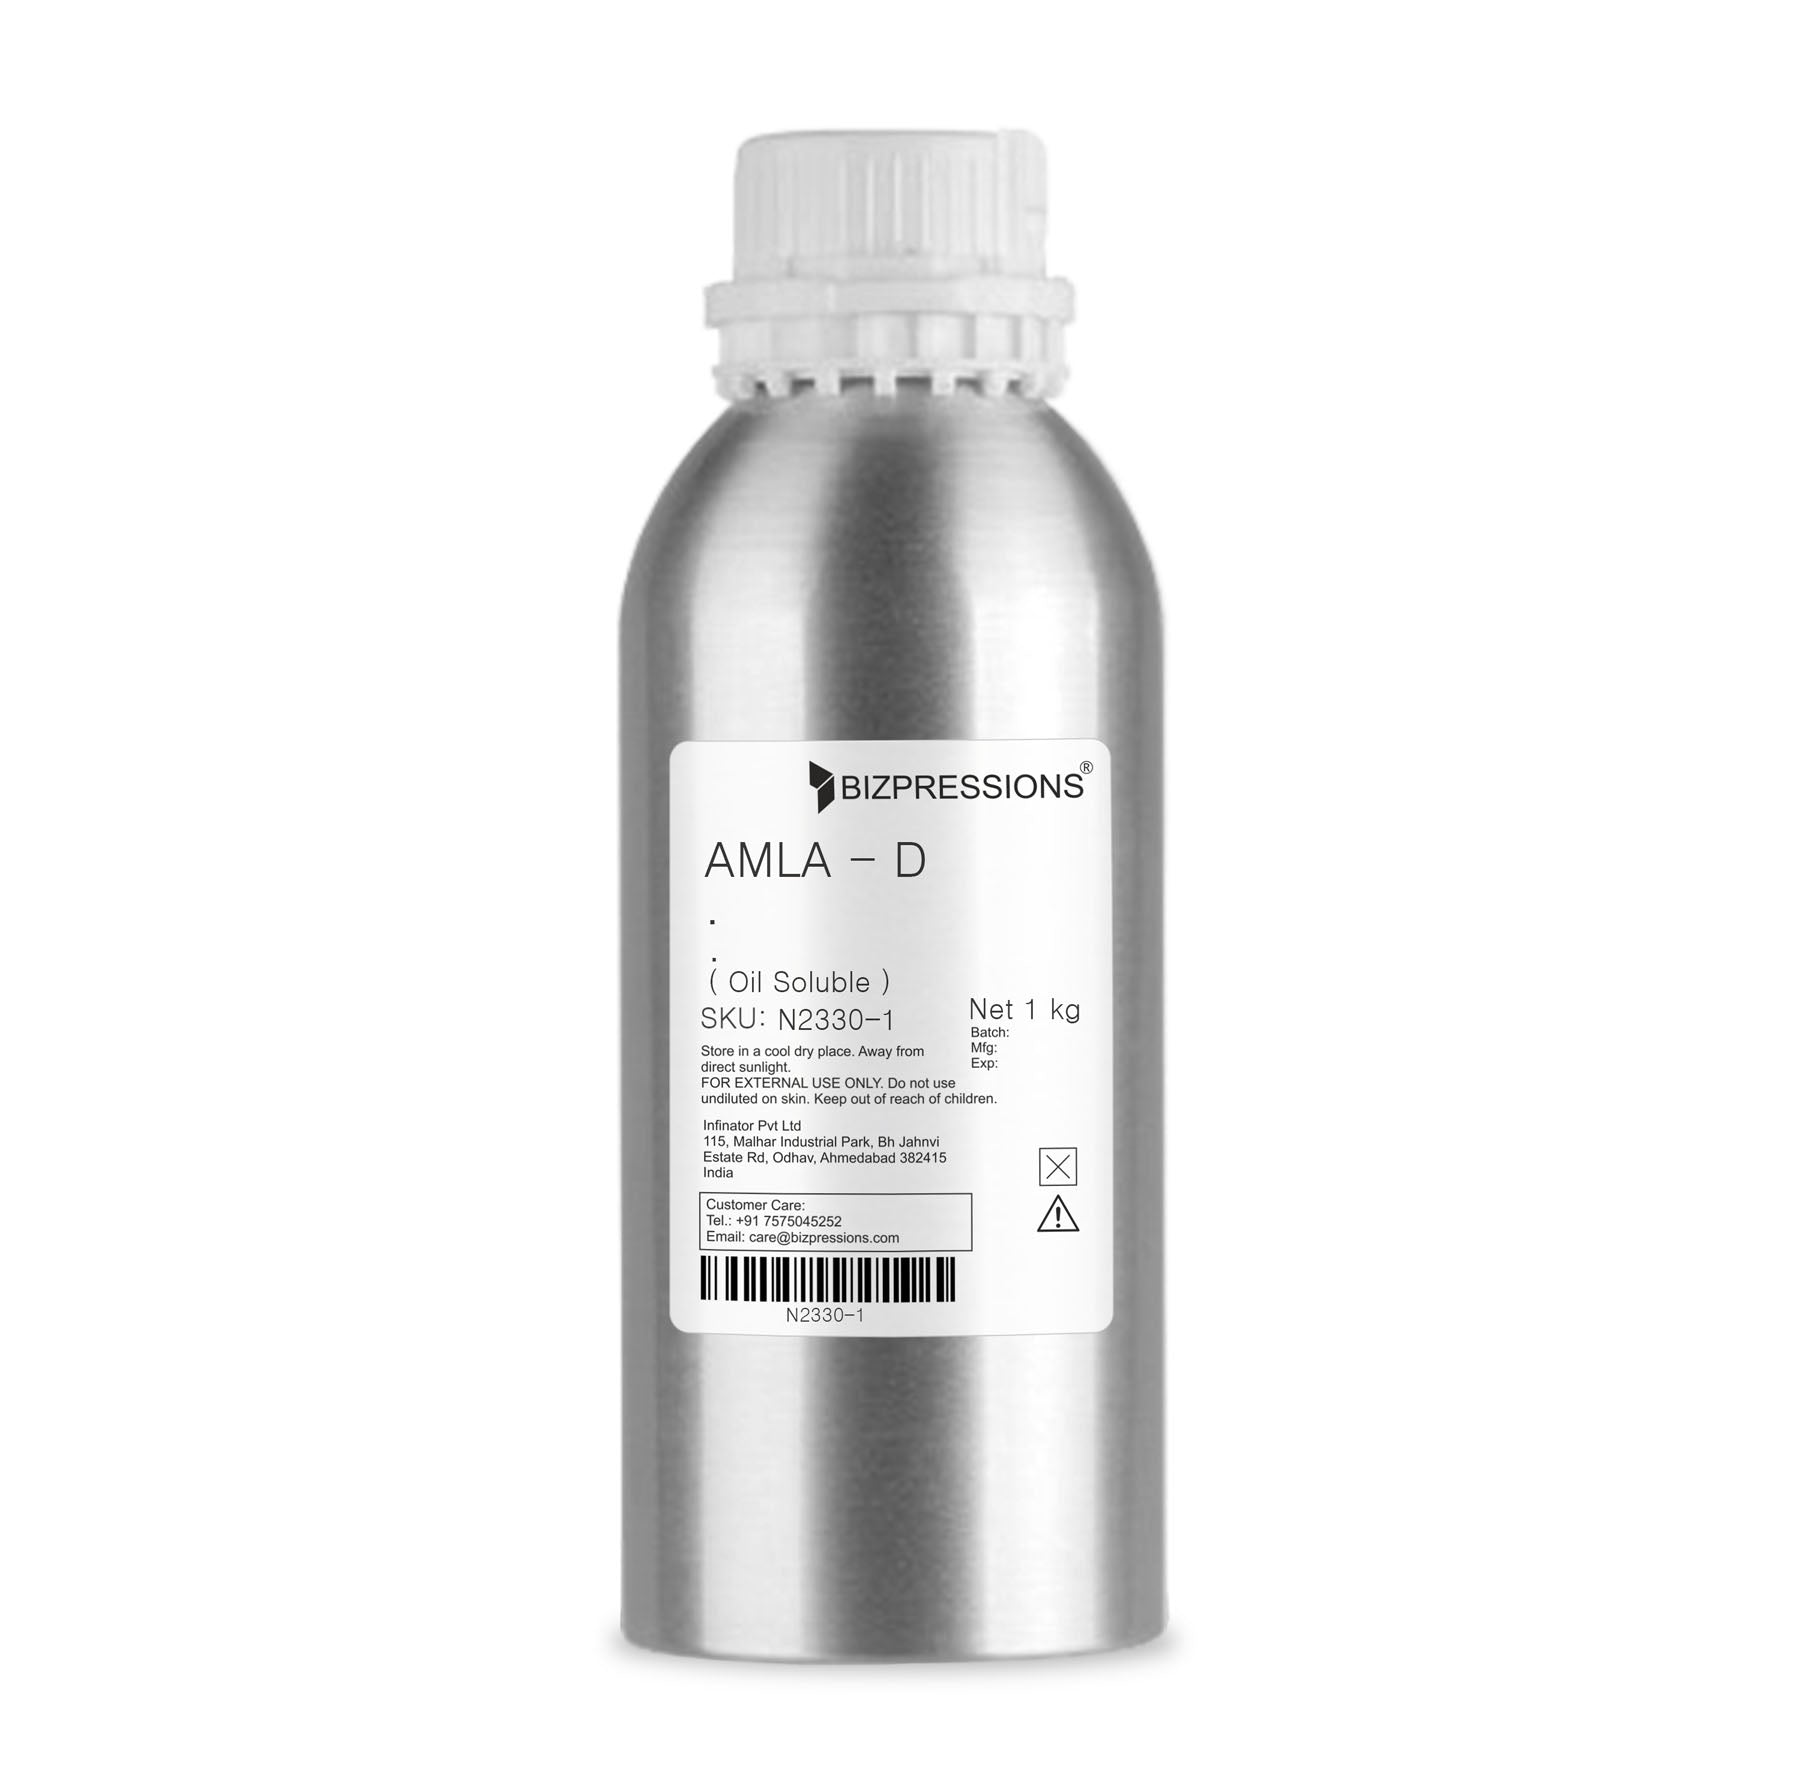 AMLA - D - Fragrance ( Oil Soluble ) - 1 kg